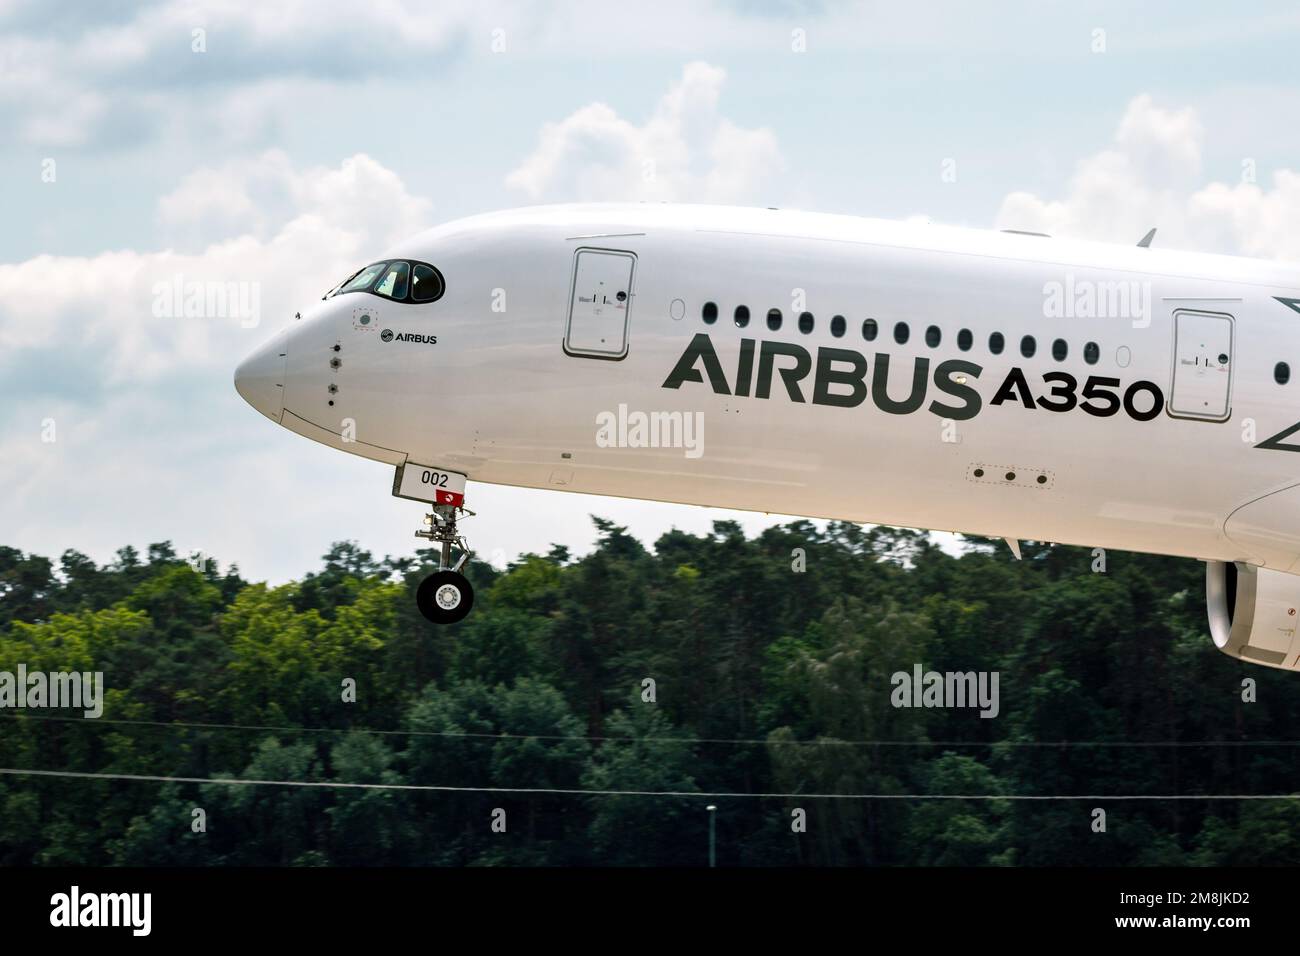 Airbus A350 XWB passenger plane landing on Berlin-Schoneveld airport during the Berlin ILA Airshow. Berlin, Germany - June 2, 2016 Stock Photo